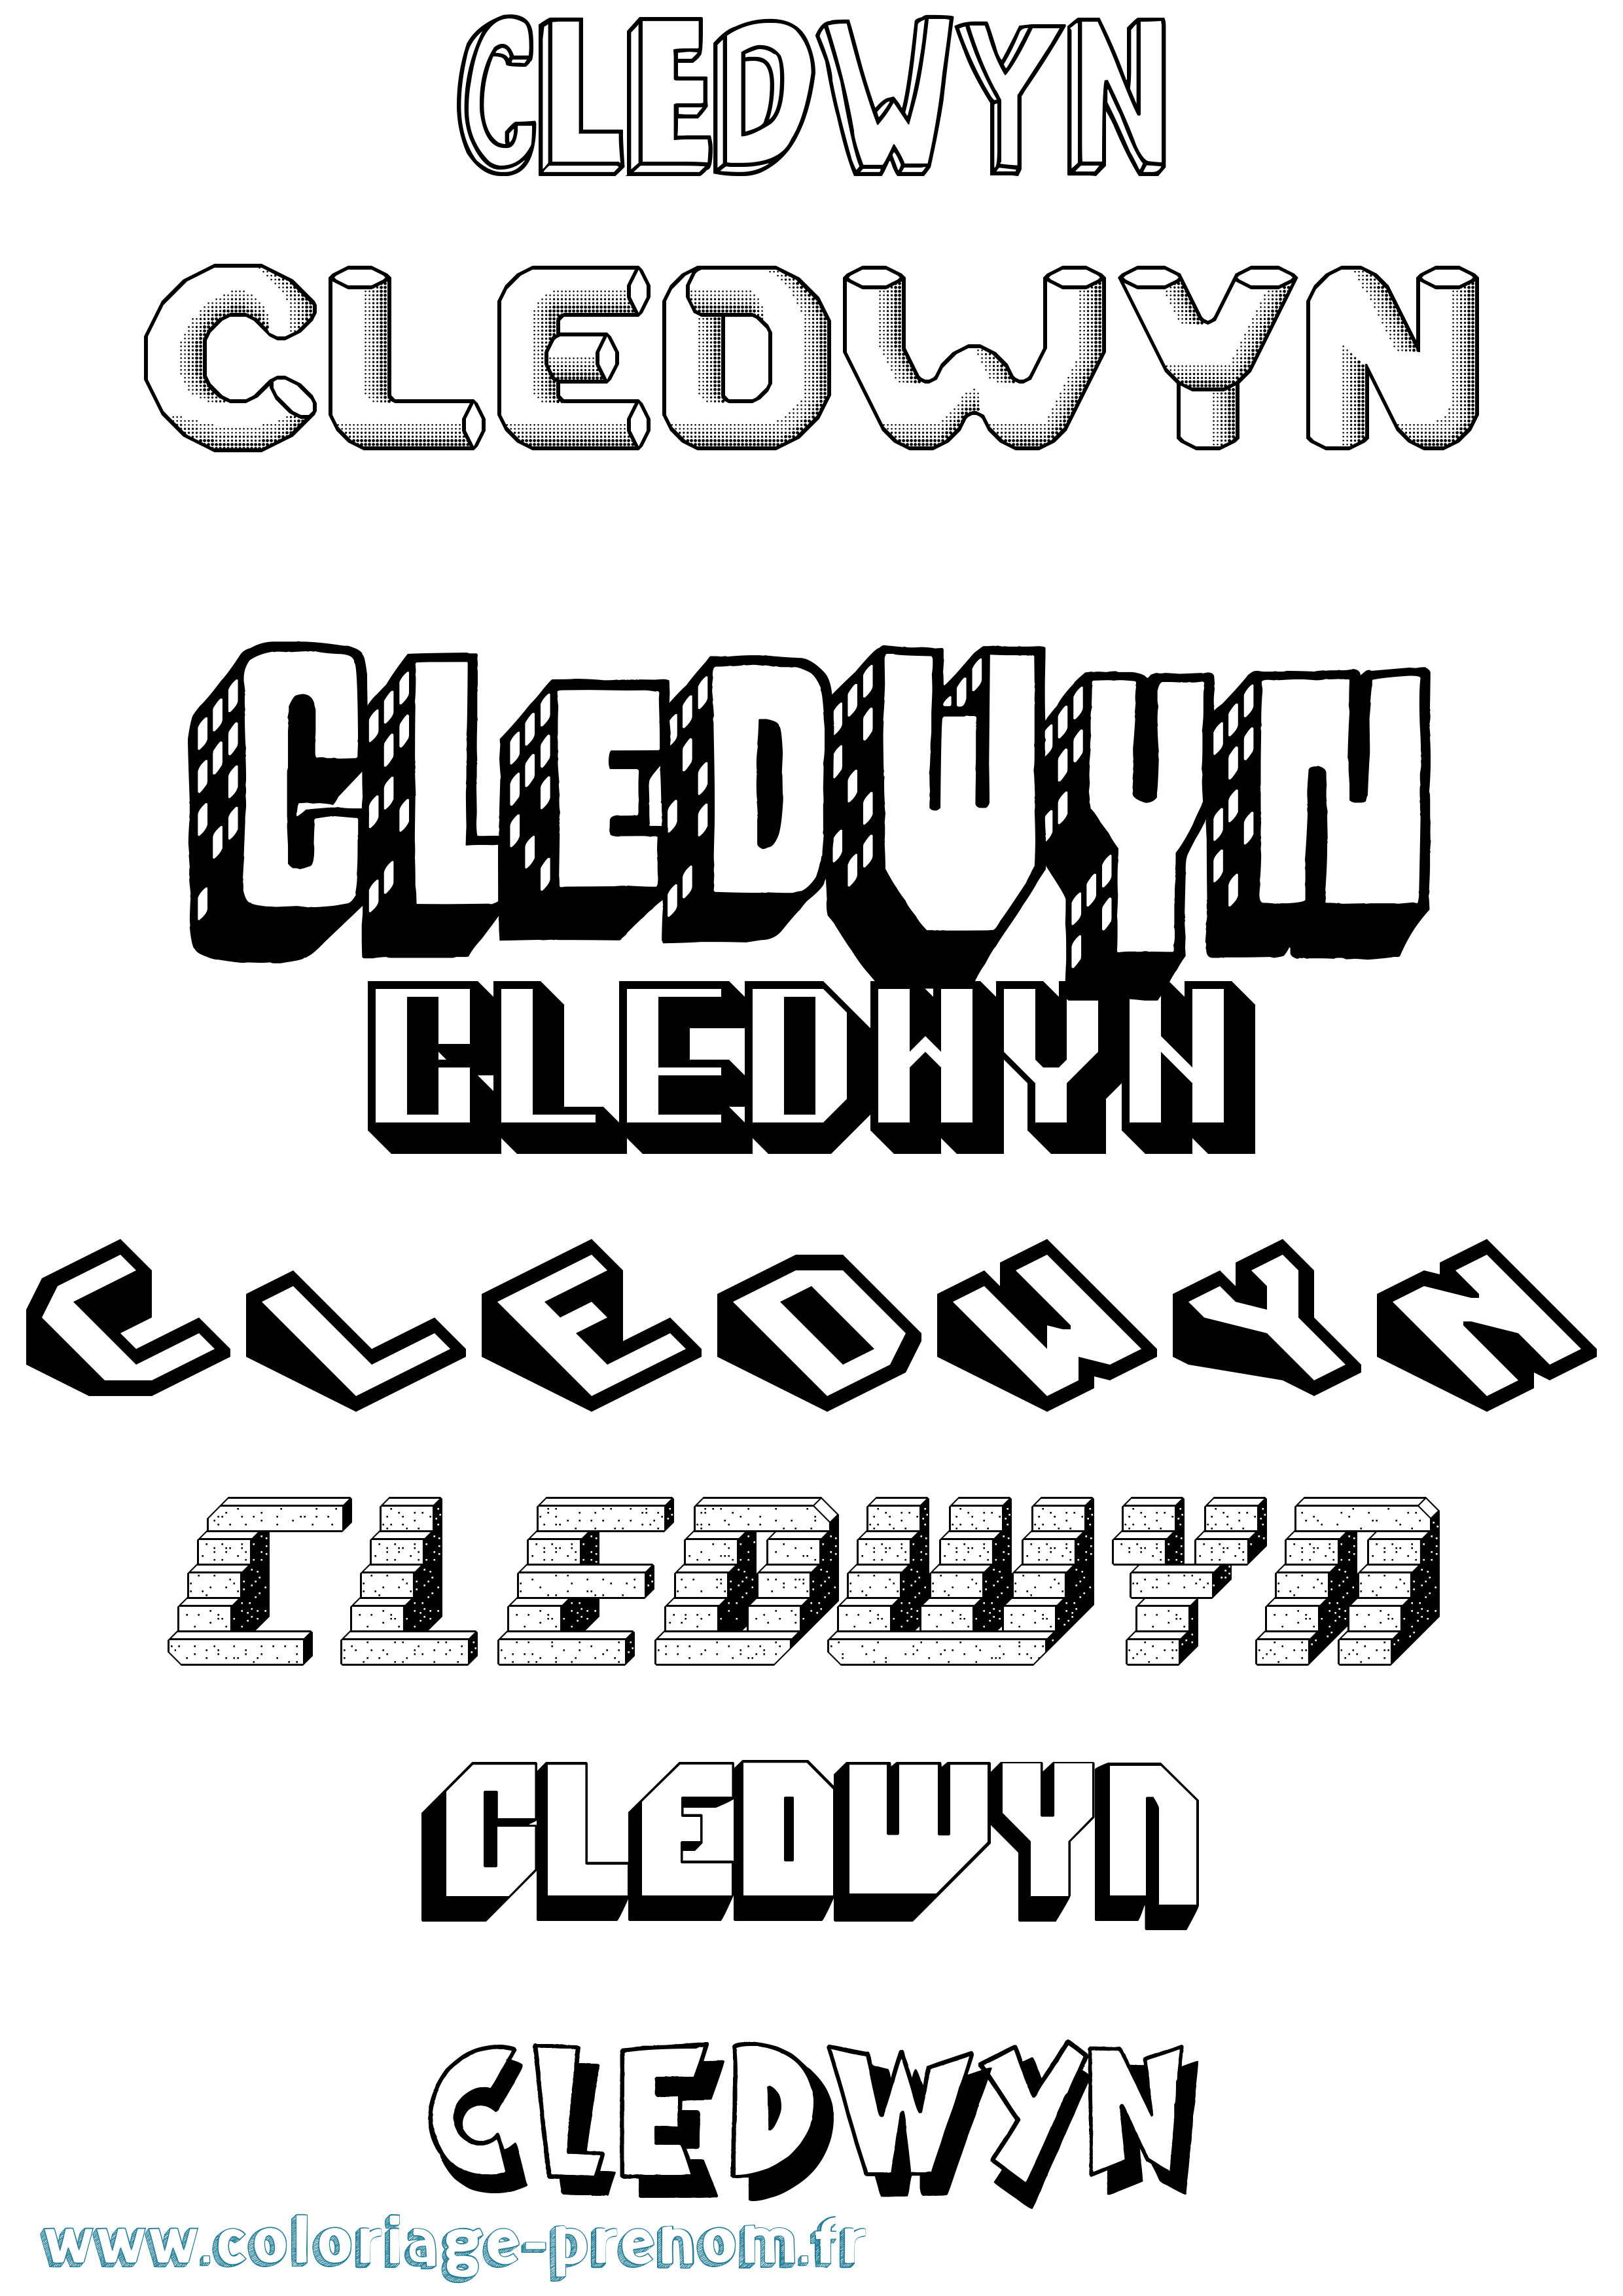 Coloriage prénom Cledwyn Effet 3D